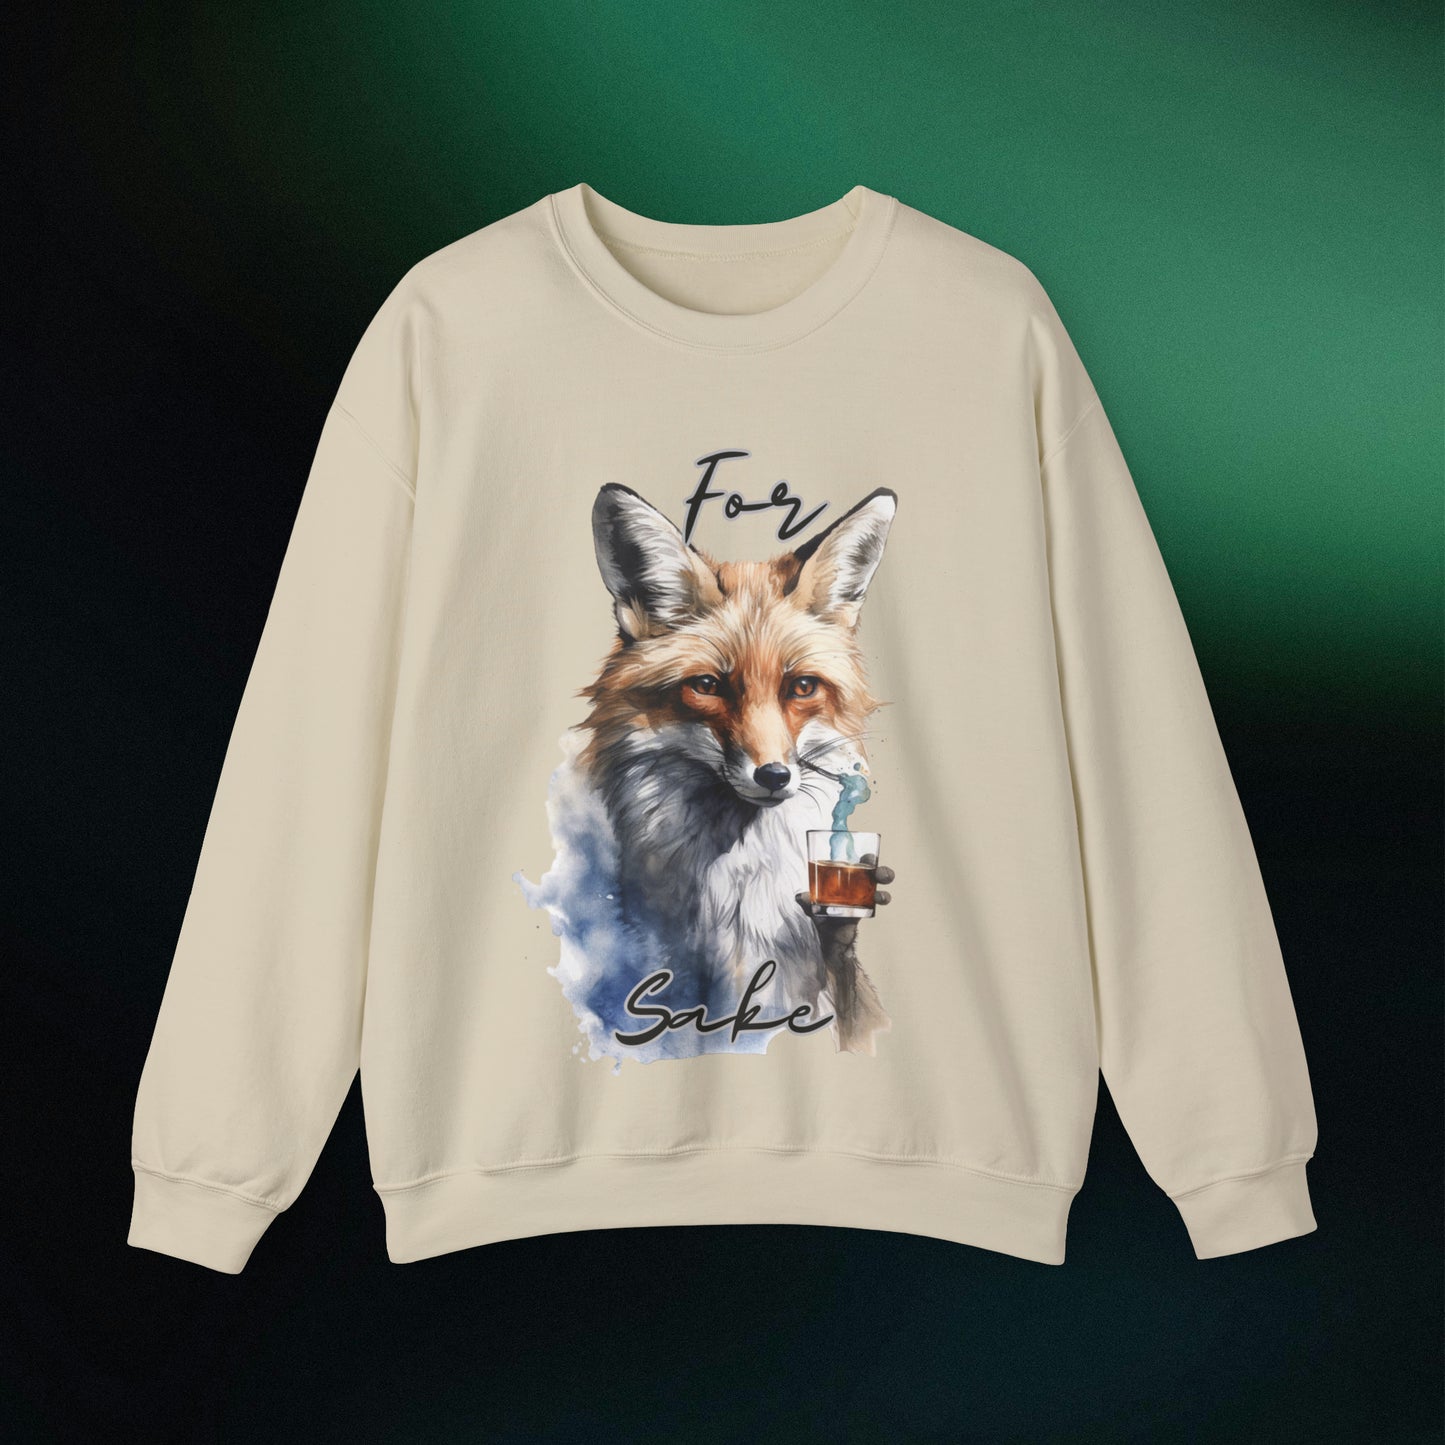 For Fox Sake: Funny Fox Sweatshirt | Gift for Fox Lover | Animal Lover Shirt - Cute Fox Gift for Nature Enthusiasts Sweatshirt S Sand 